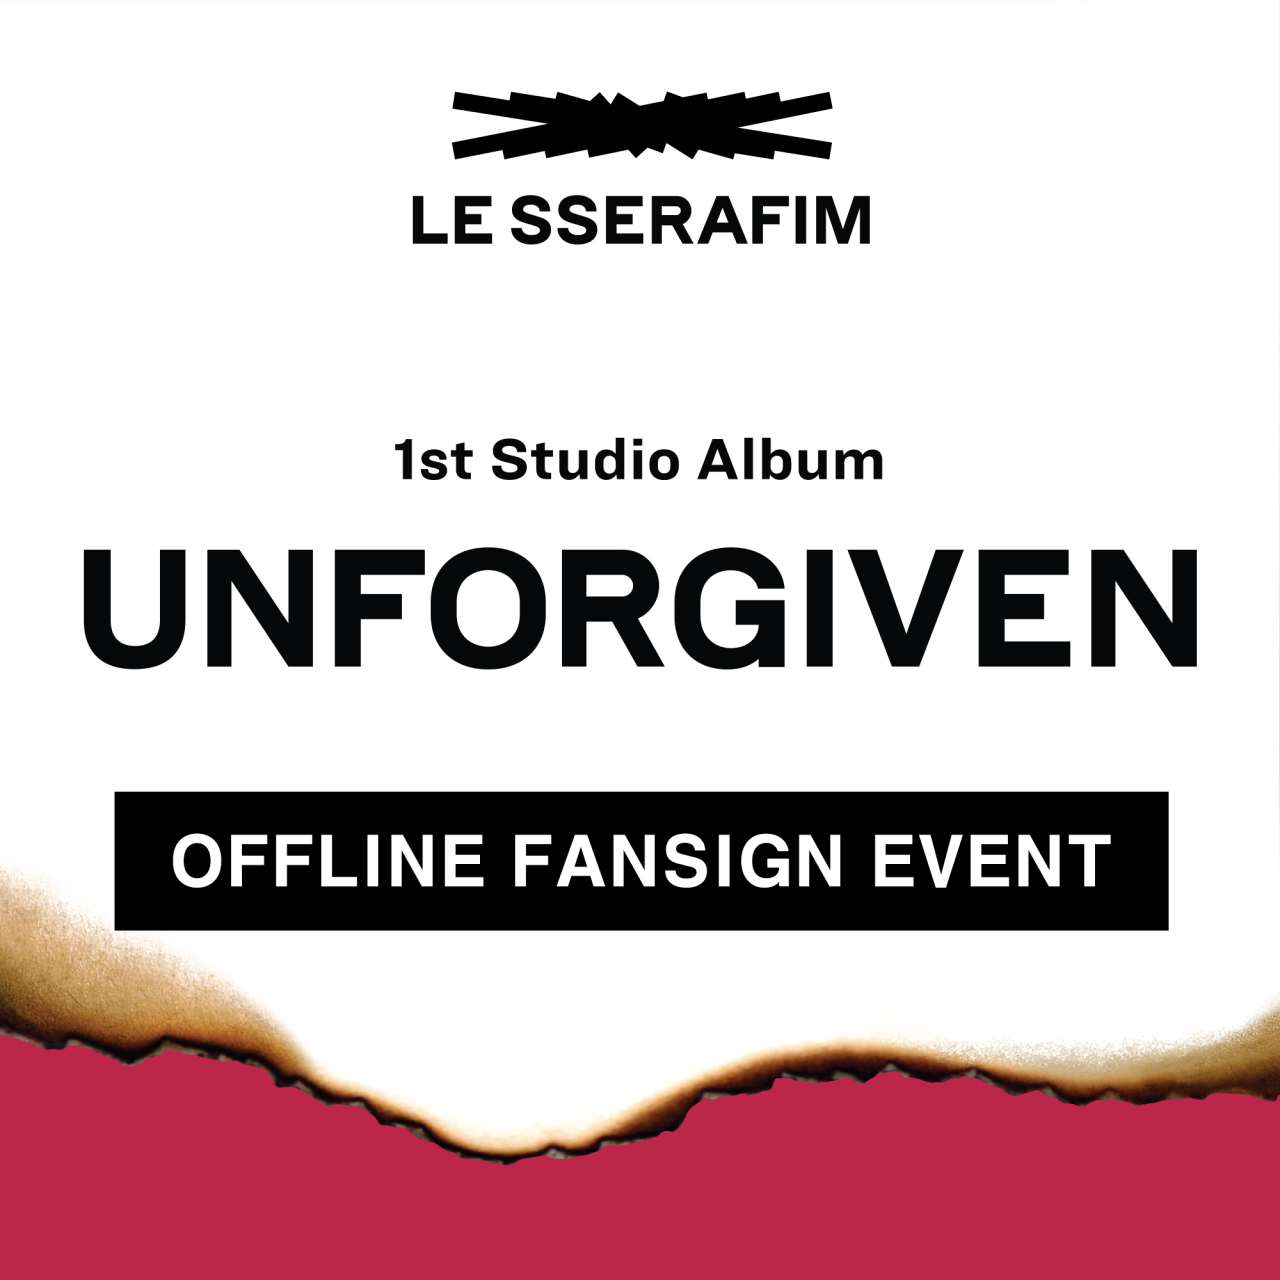 LE SSERAFIM 1st Studio Album 'UNFORGIVEN' □OFFLINE FANSIGN EVENT 